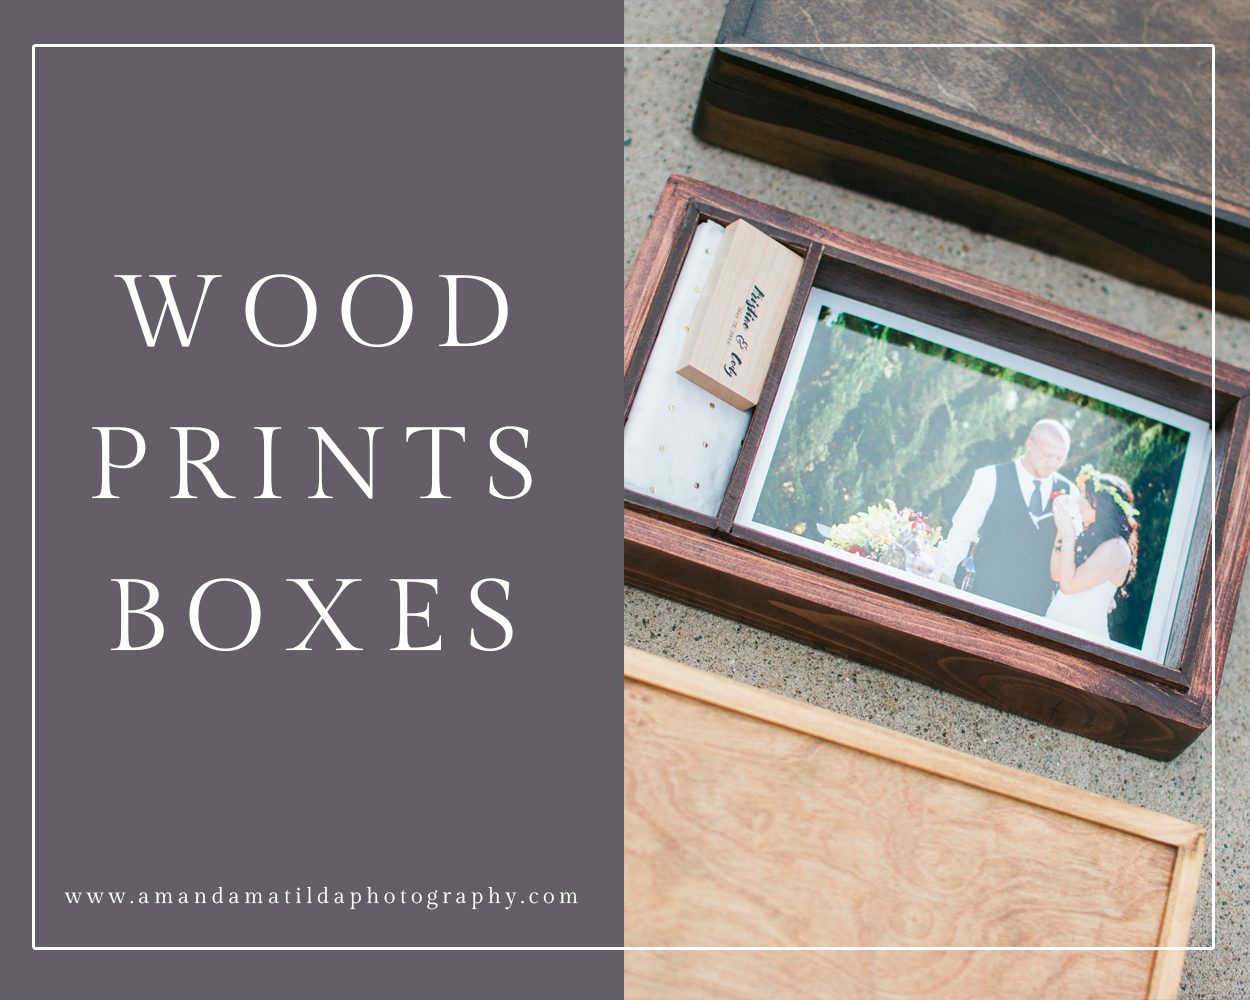 Handcrafted Wood Prints Boxes | amanda.matilda.photography - Grand Junction, Colorado wedding photographer